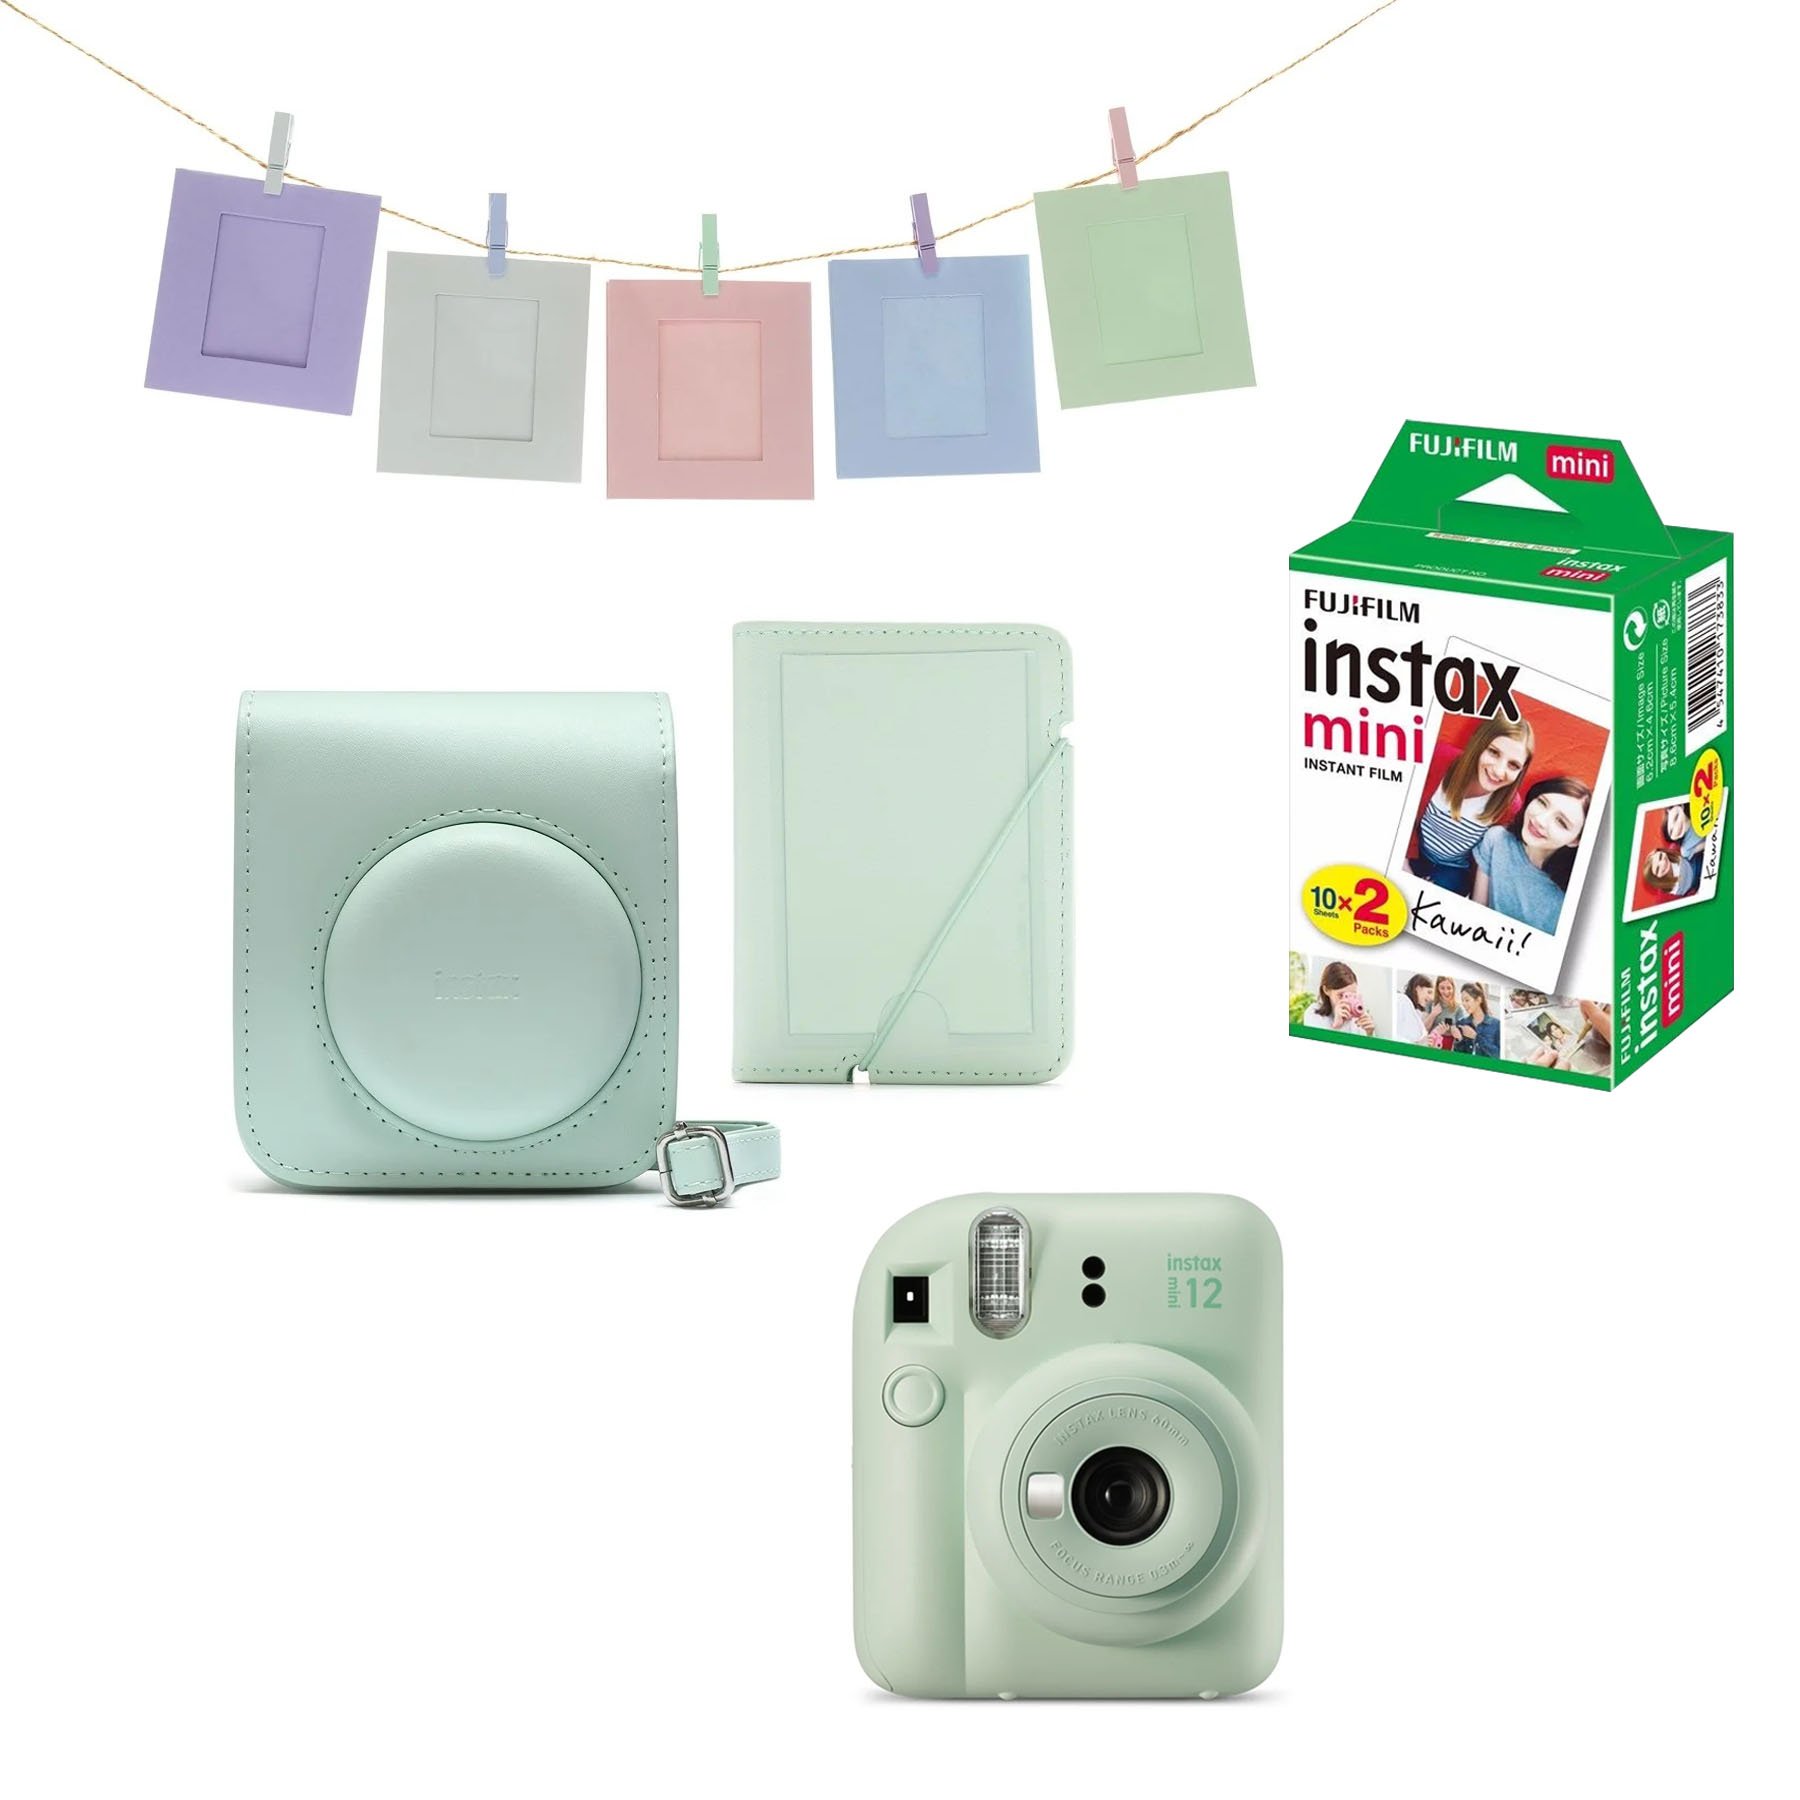 FUJIFILM INSTAX MINI 12 Instant Film Camera (Mint Green) + Fuji Instax  Instant Film Single Pack - 10 Prints + Protective Case - Green + Photo Album  - Green + Travel Stickers - Bundle! 